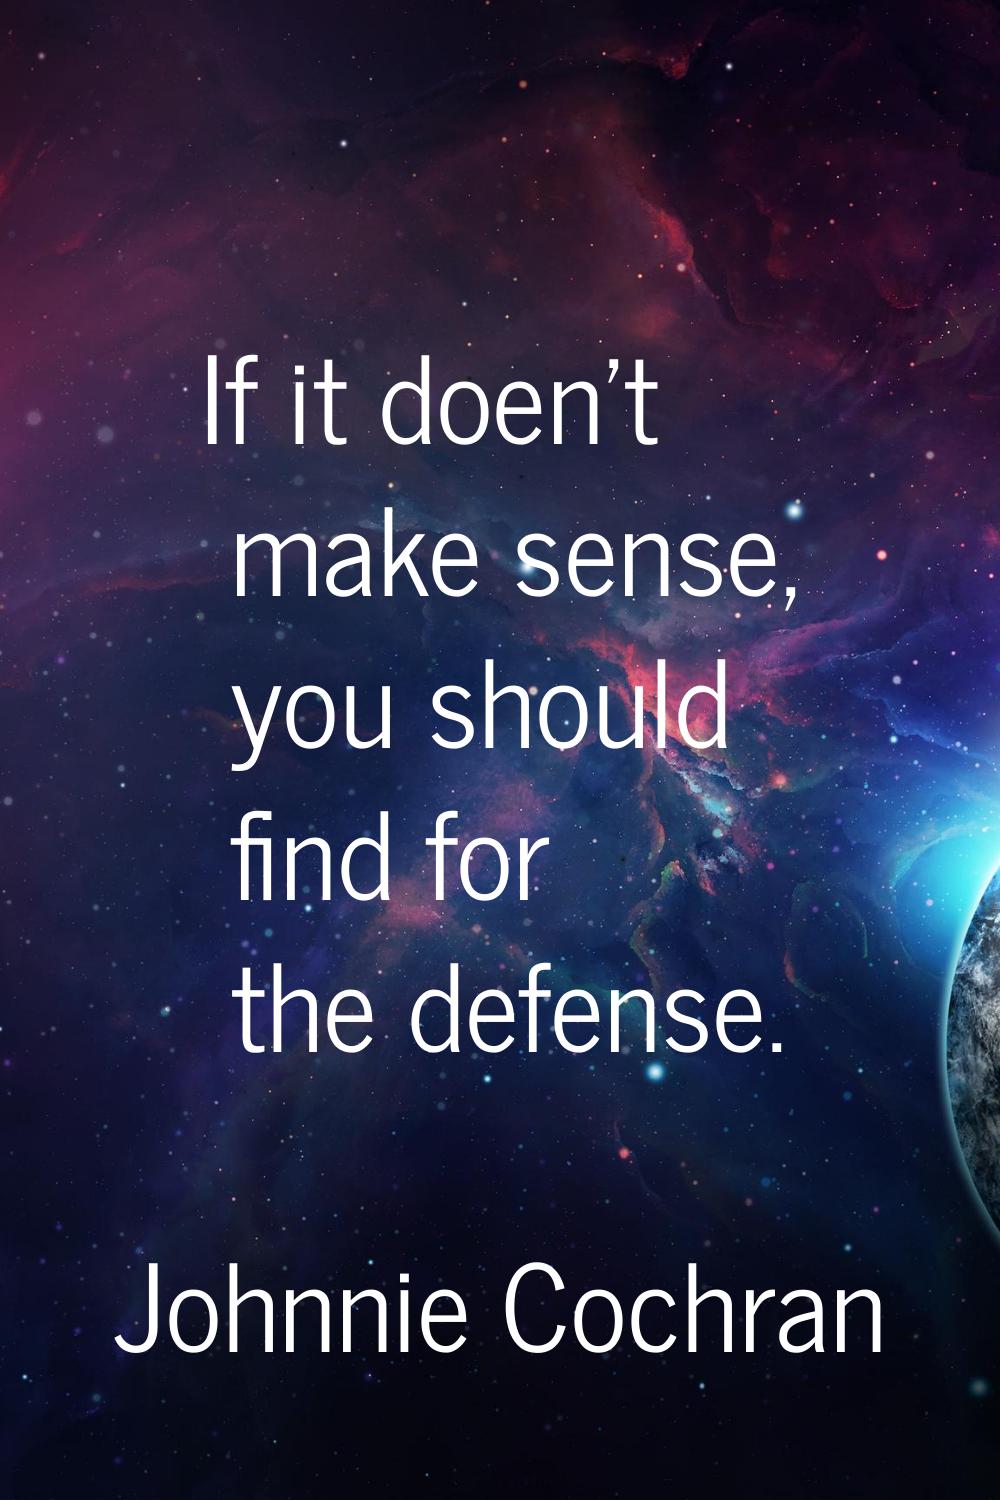 If it doen't make sense, you should find for the defense.